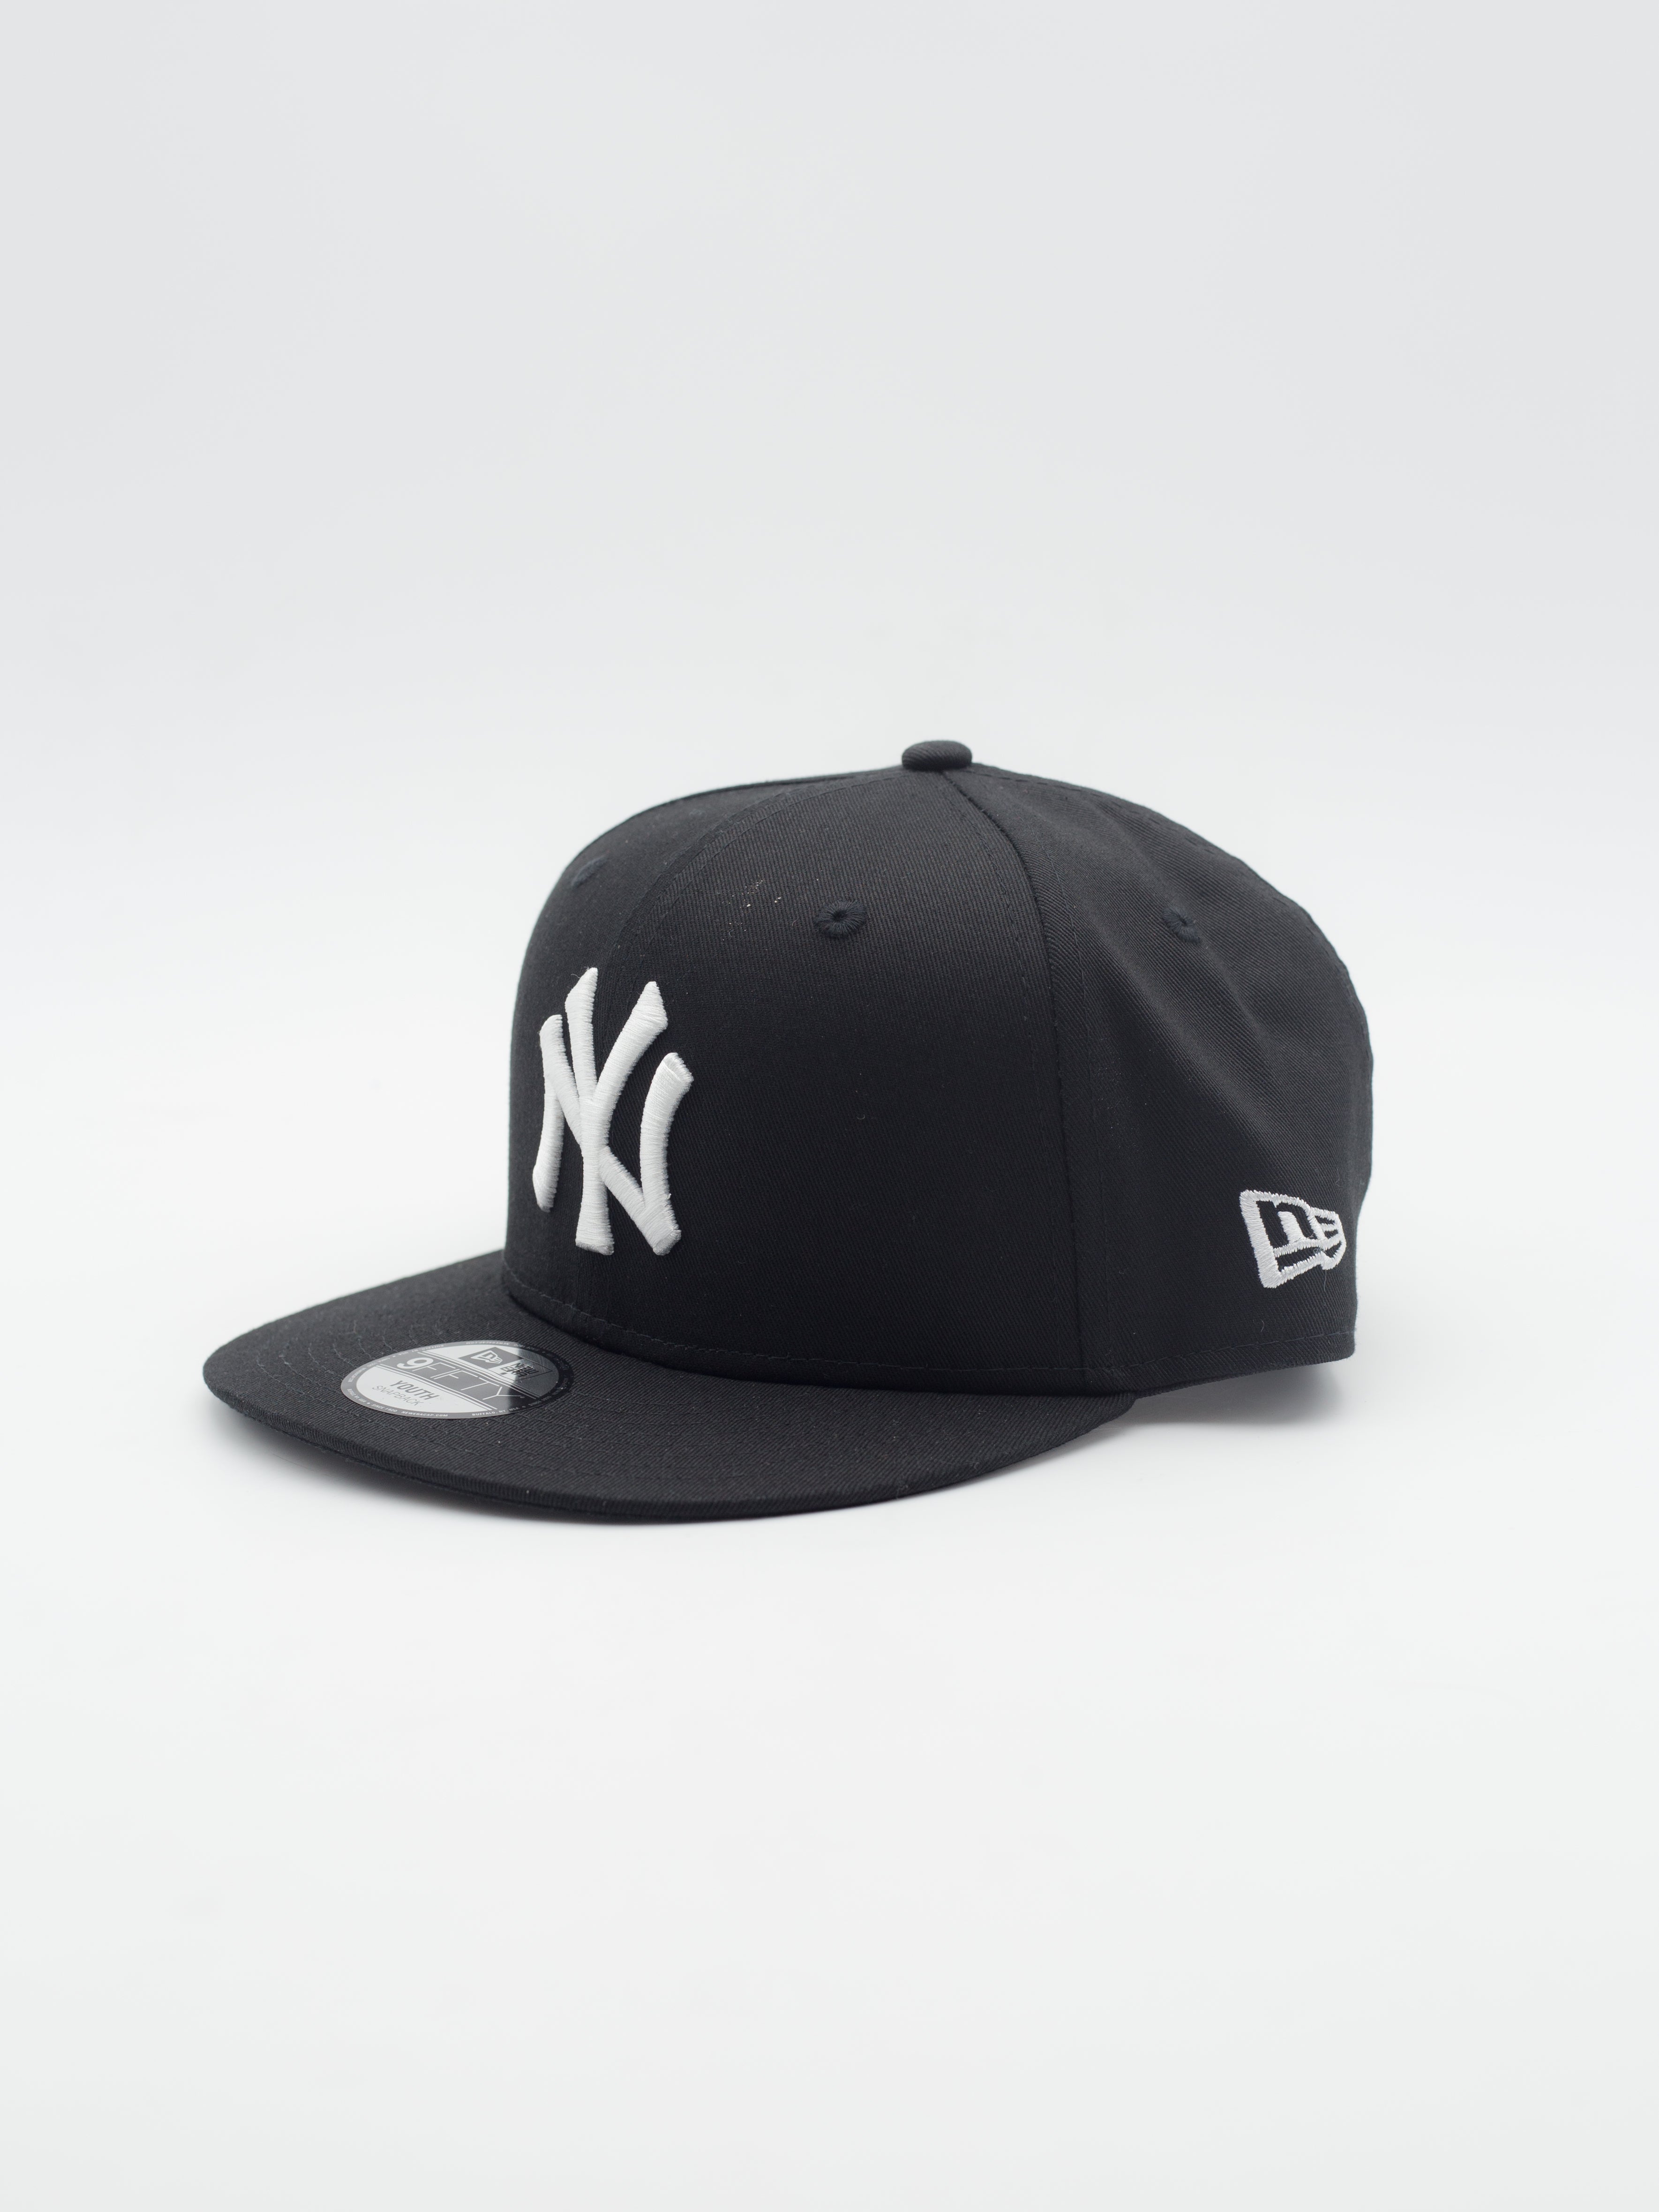 9FIFTY Youth New York Yankees Snapback black/white (niño)